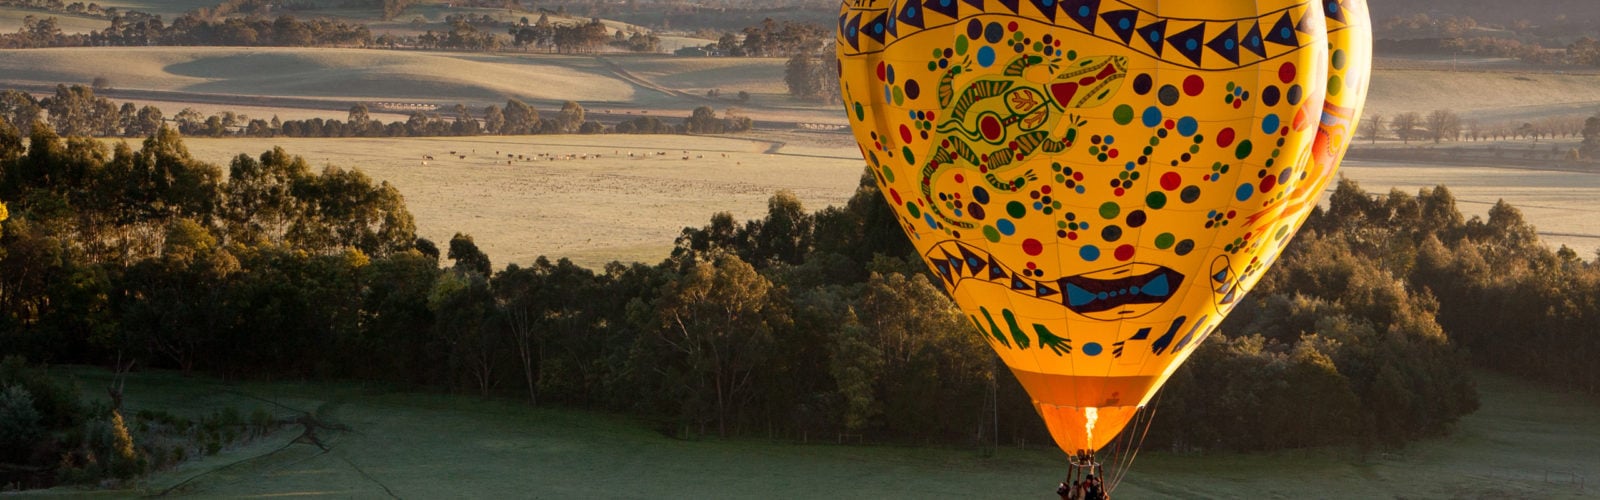 hot-air-balloon-yarra-valley-victoria-australia